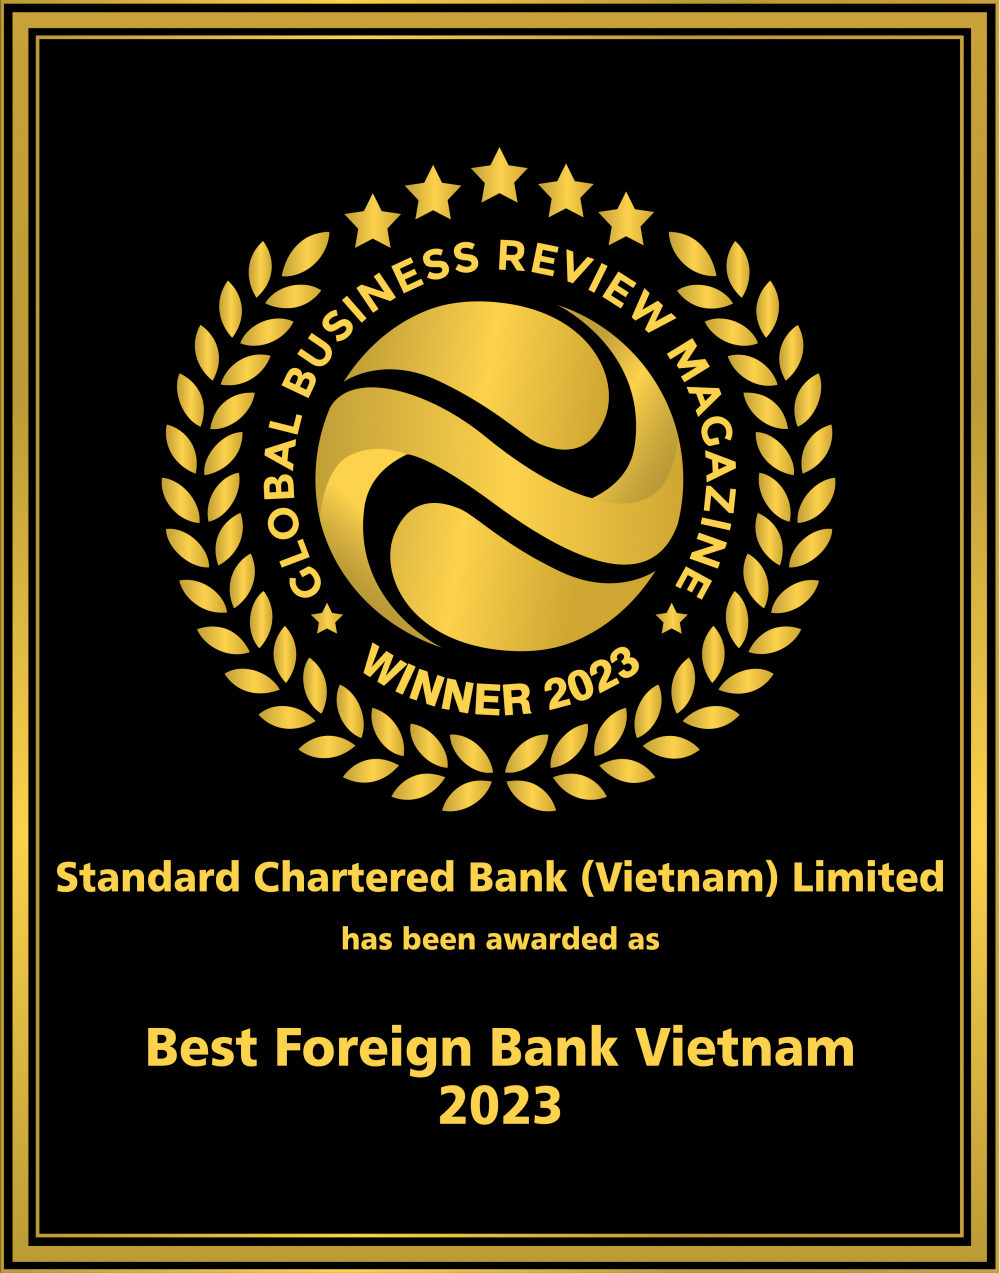 standard chartered nhan hai giai thuong tu global business review